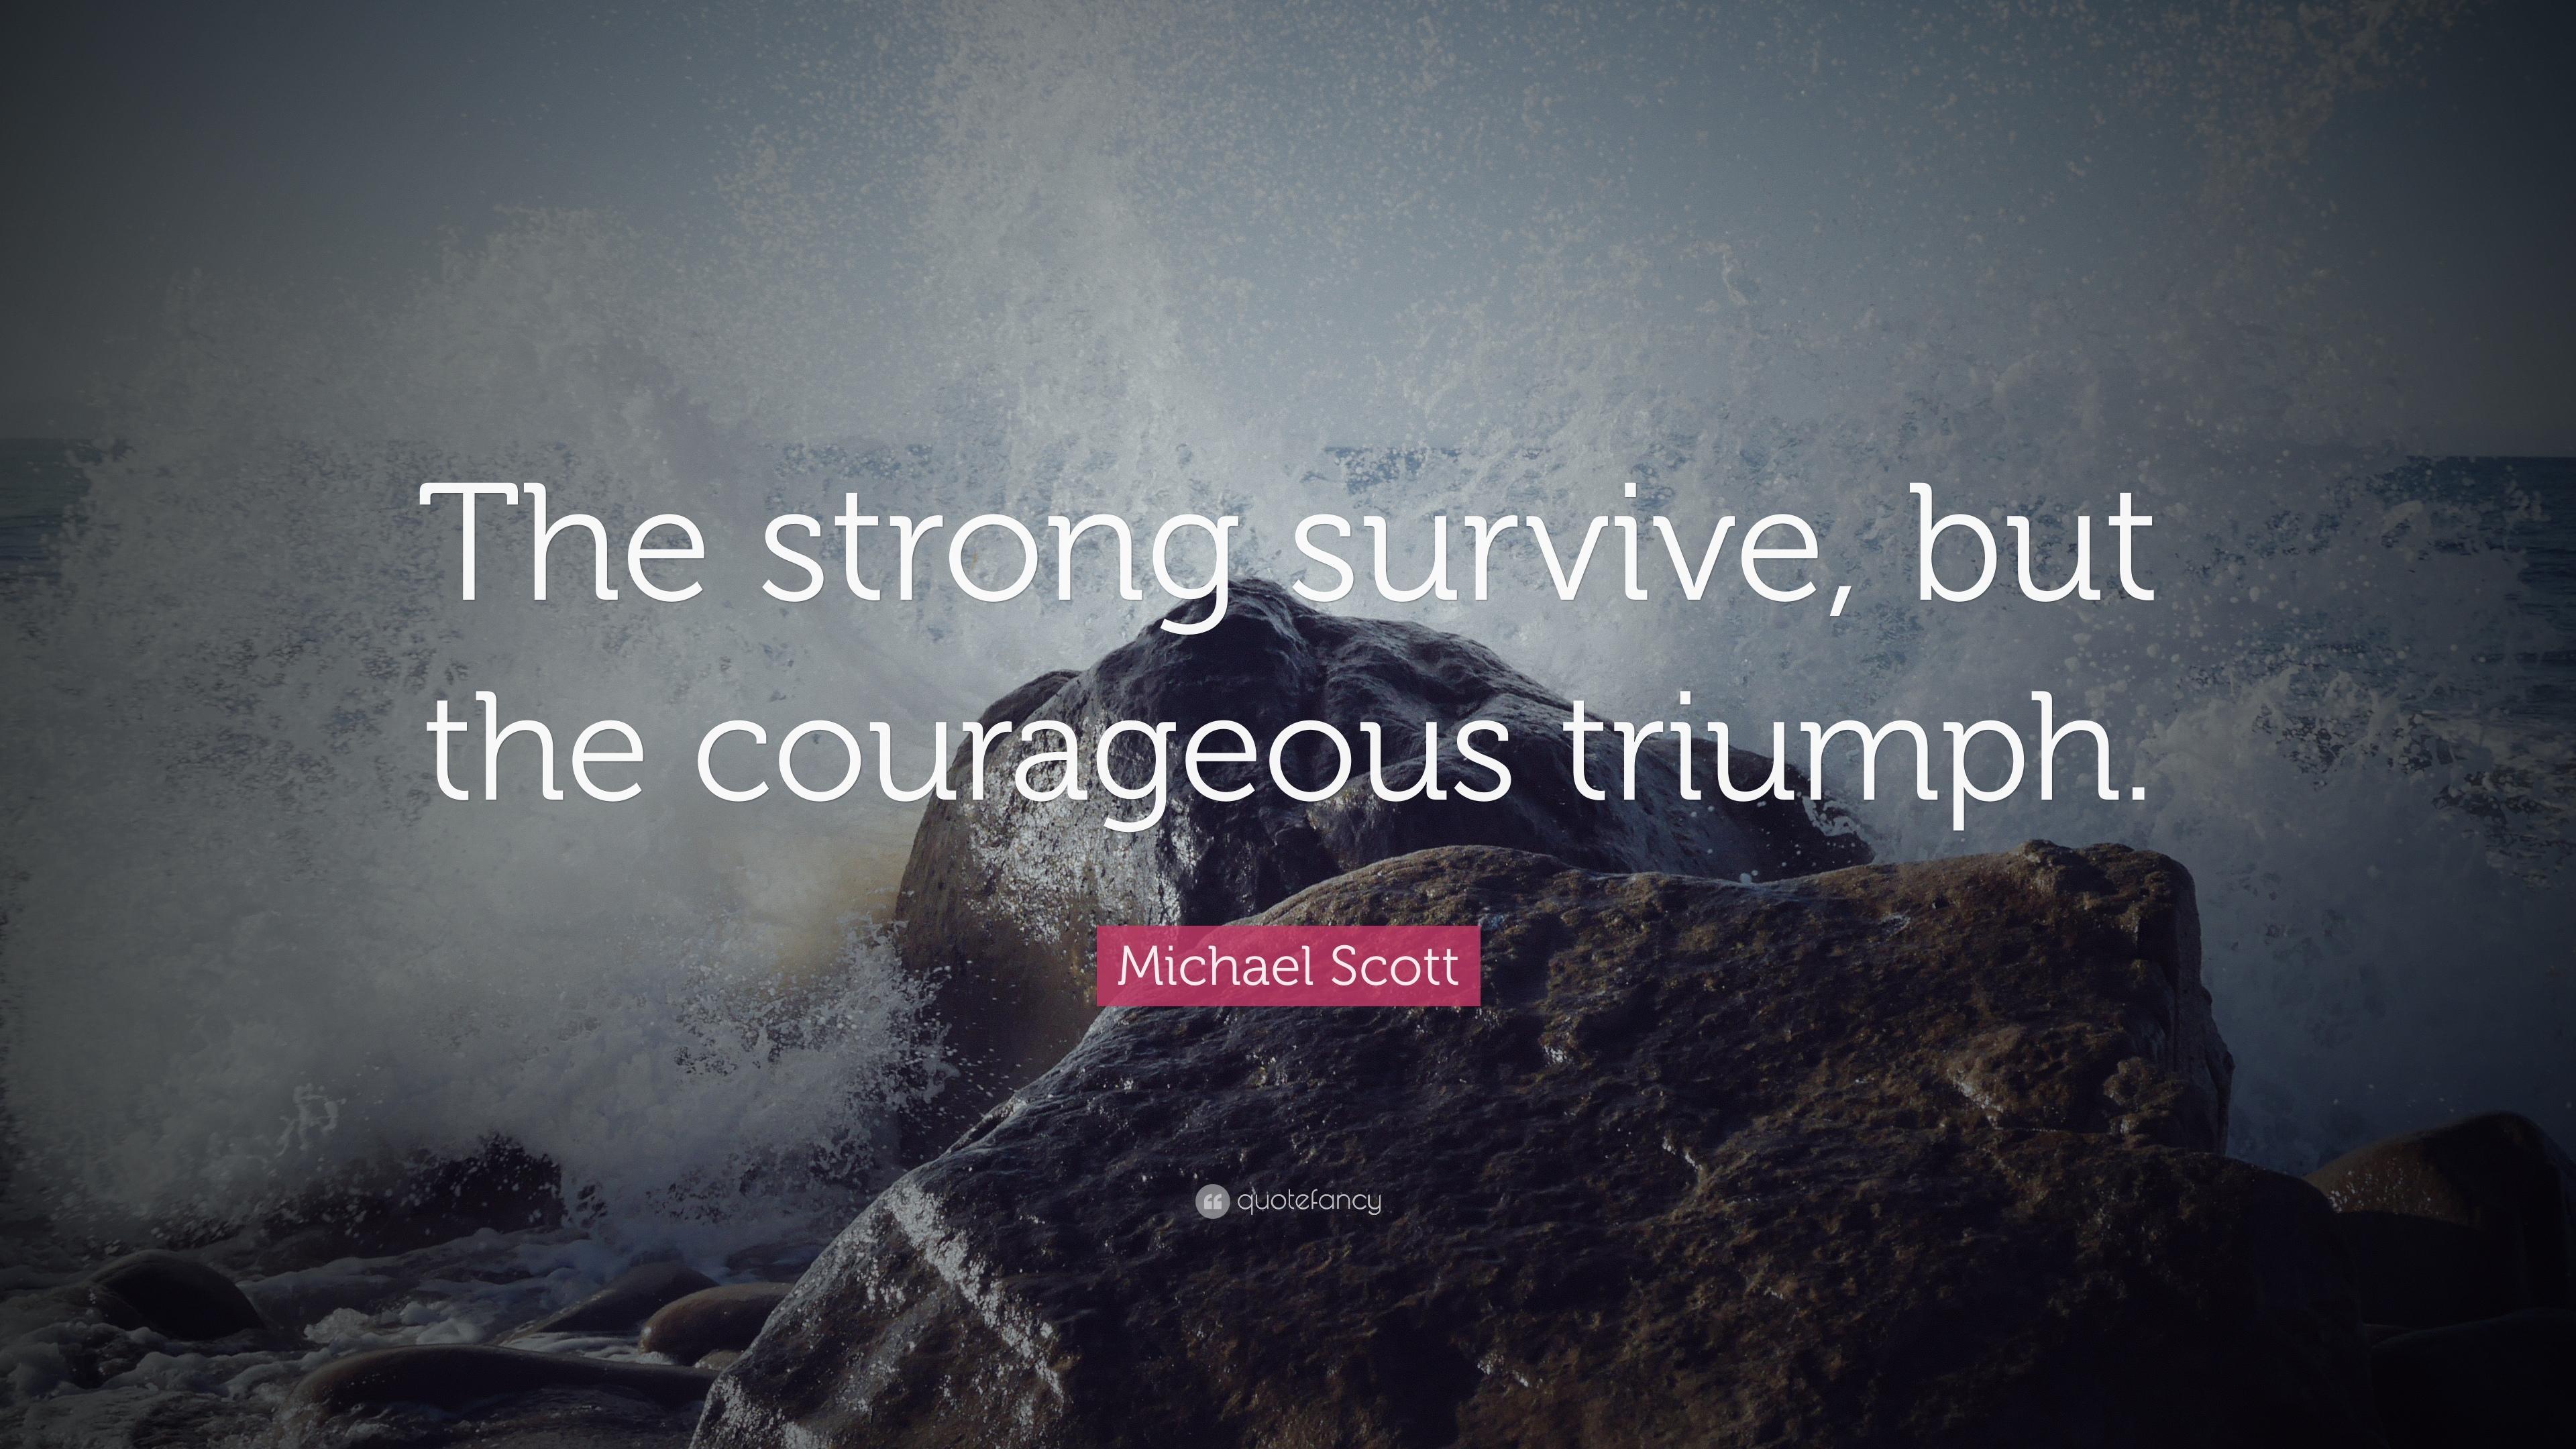 Michael Scott Quote: “The strong survive, but the courageous triumph